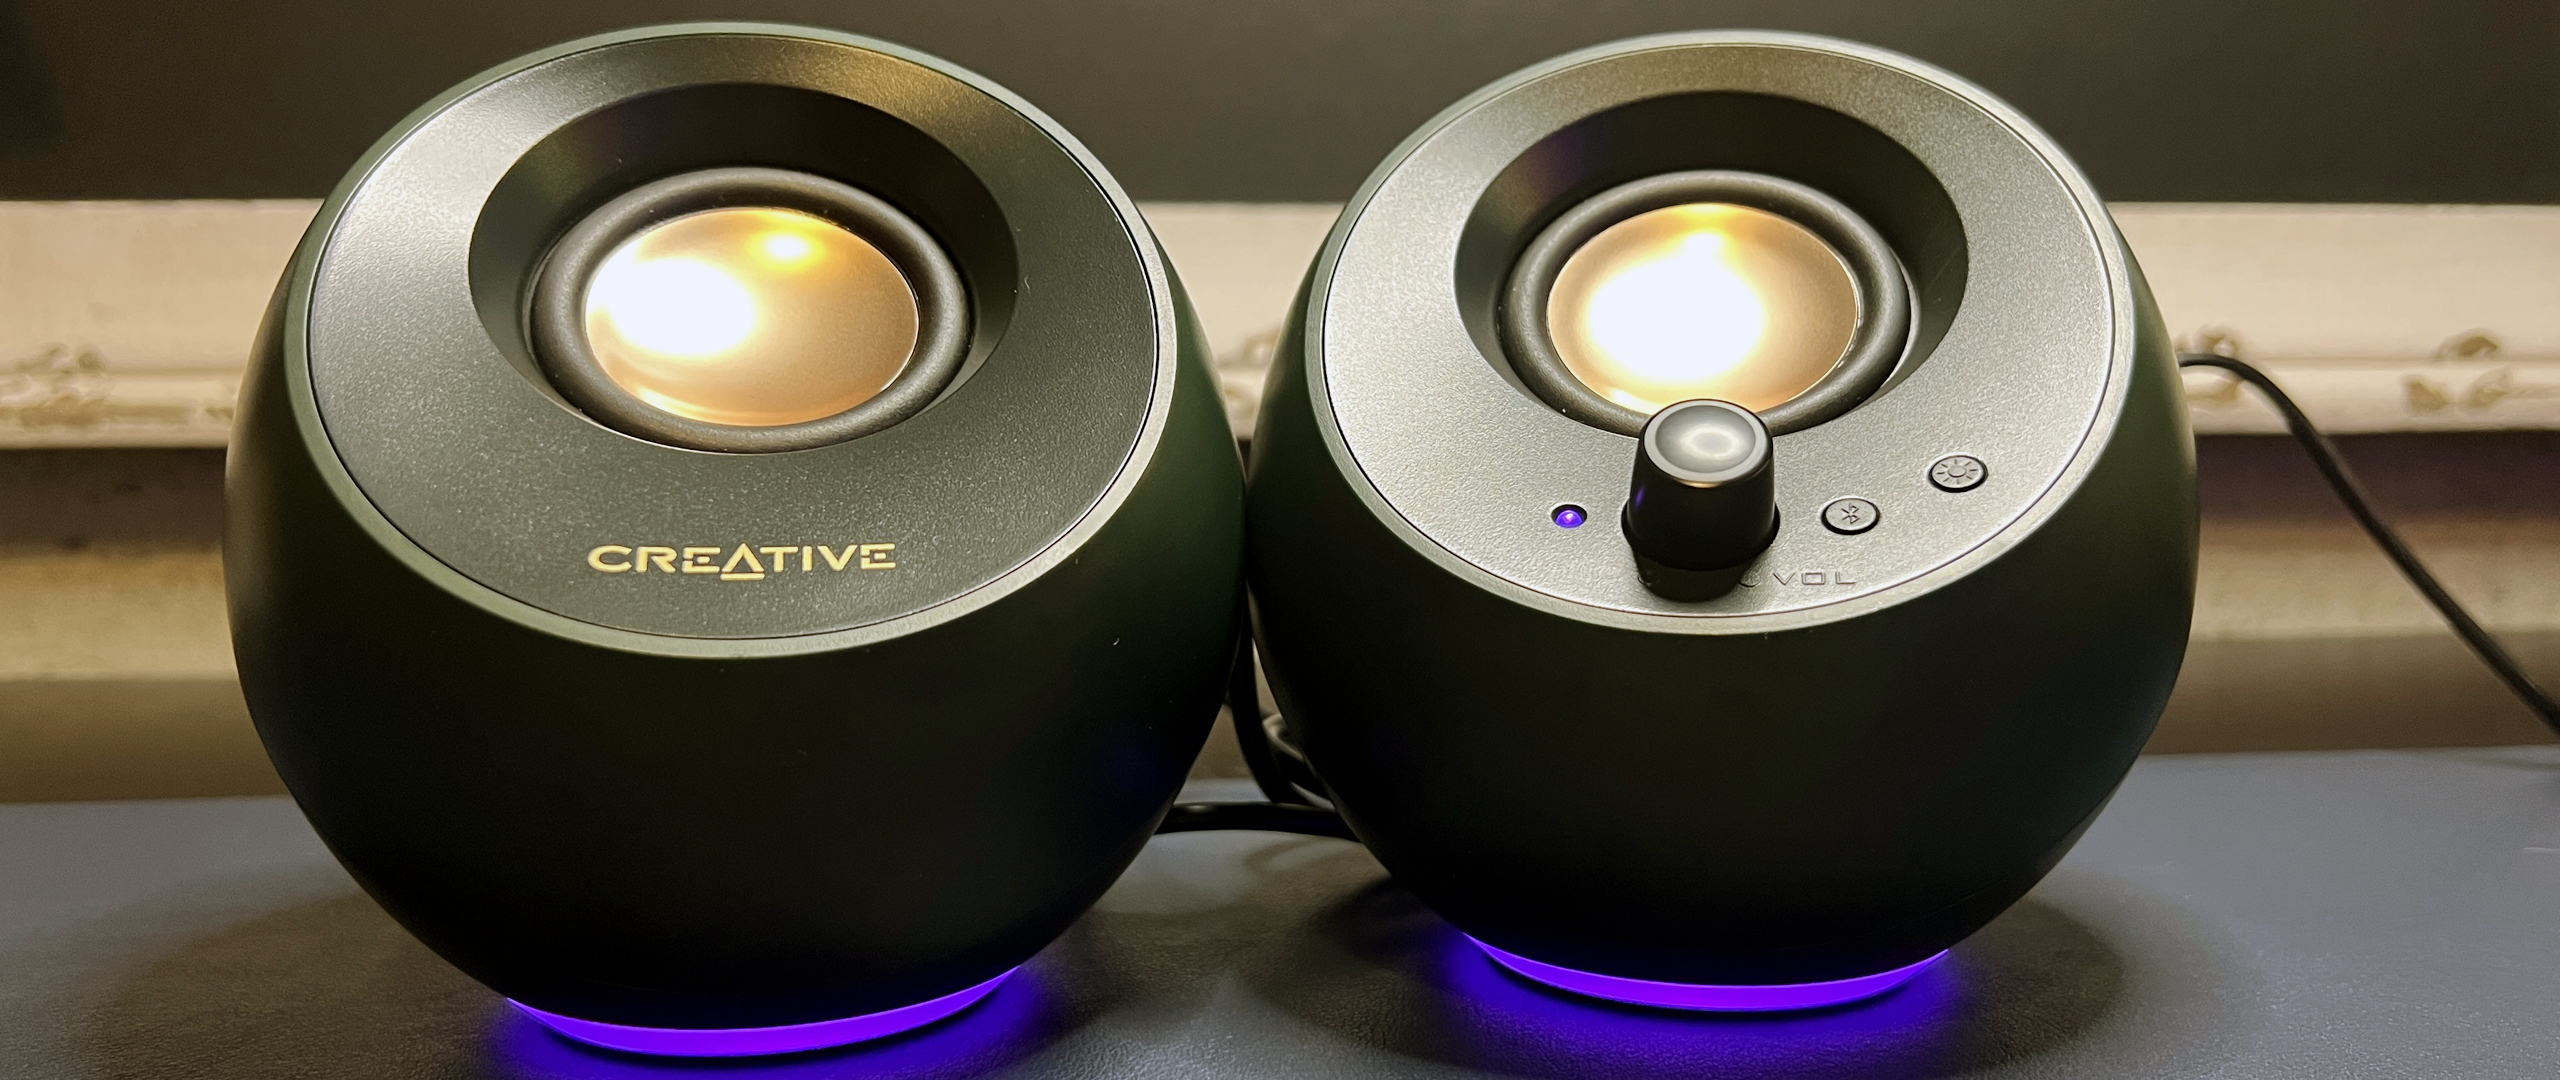 Creative Pebble V2 Desktop 2.0 Speakers Review